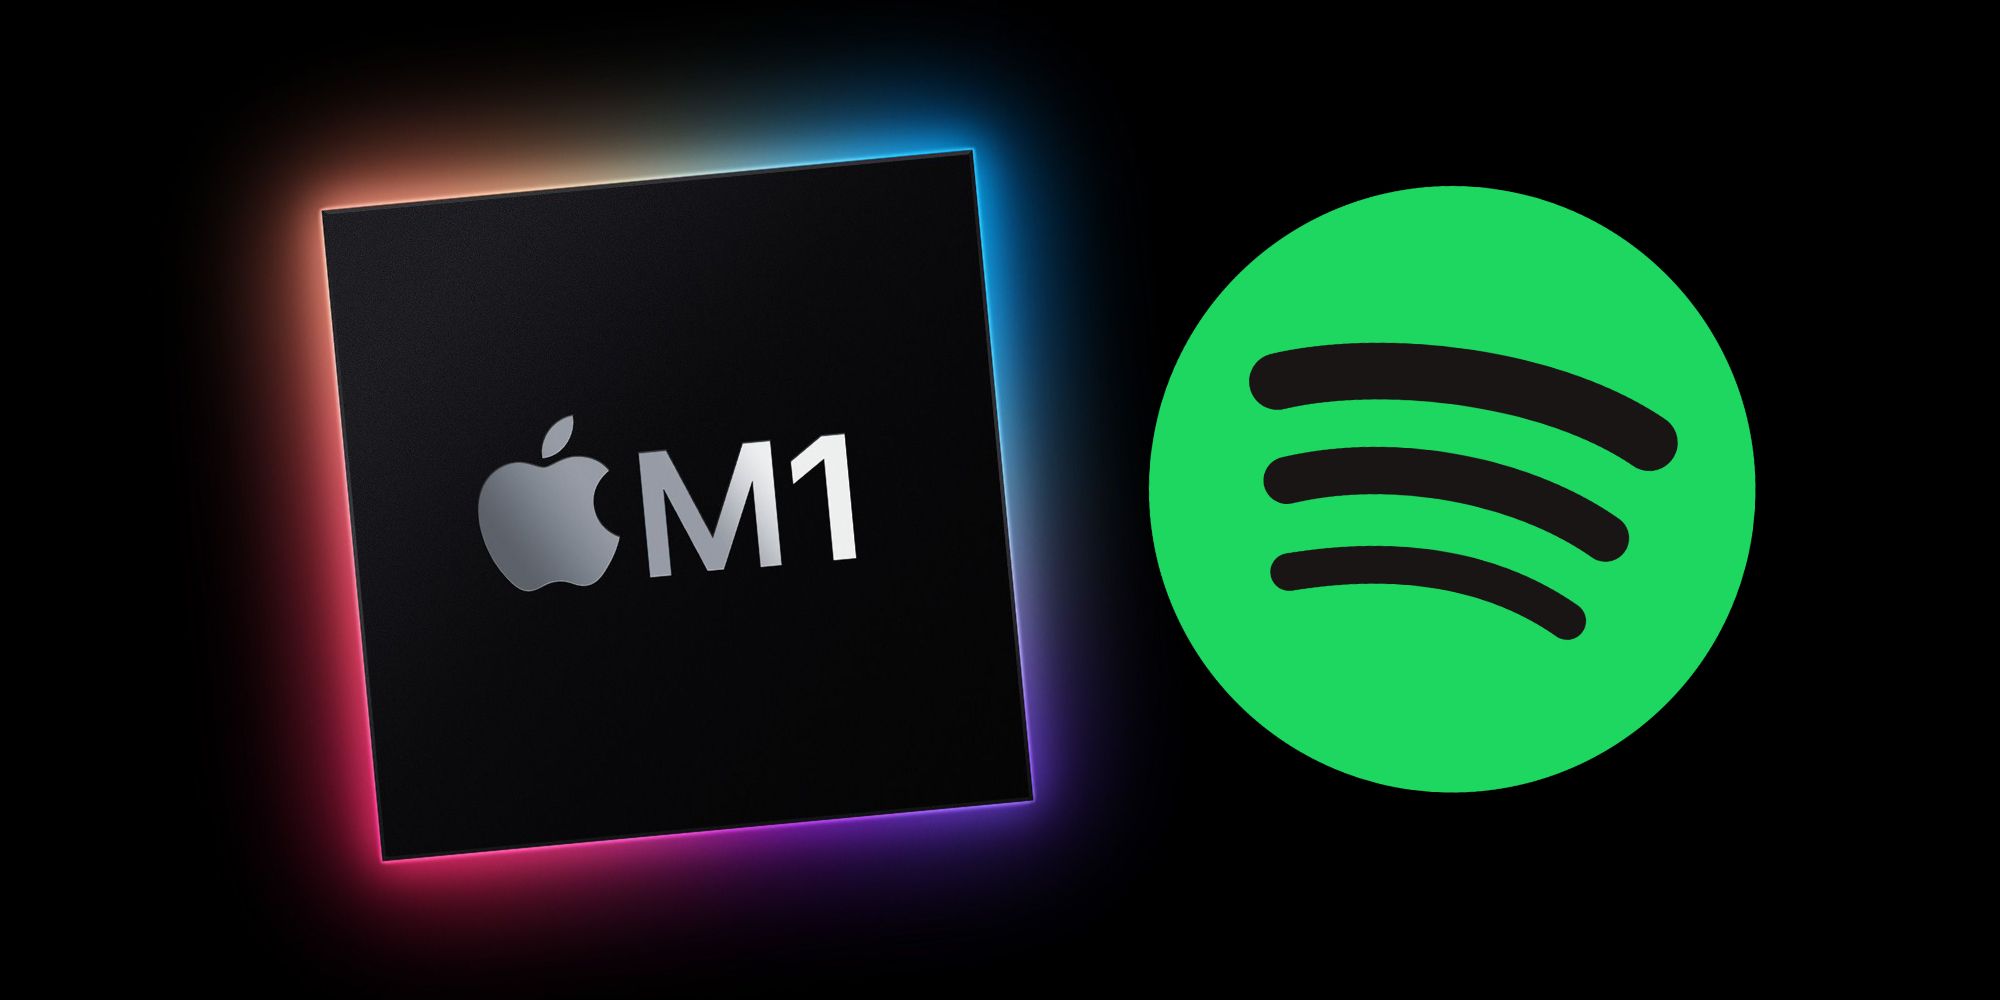 Apple M1 chip next to Spotify logo